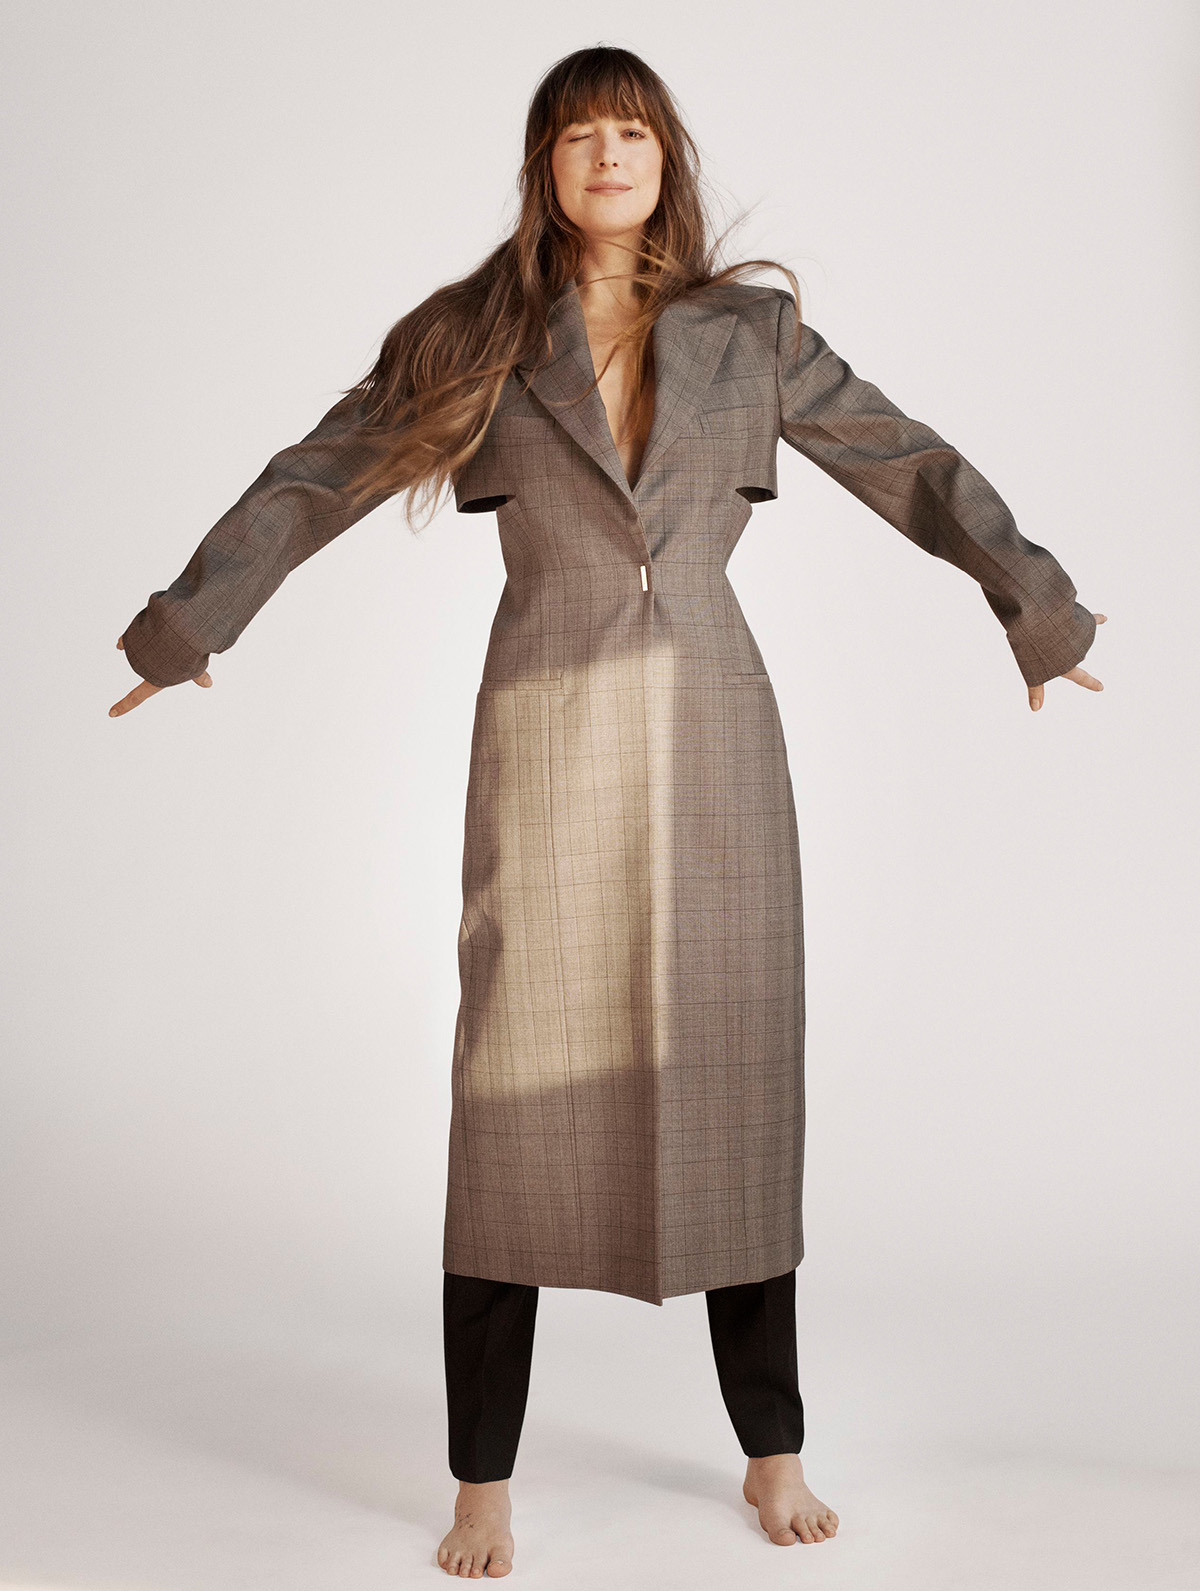 Dakota Johnson in Gucci on Elle UK February 2022 by Paola Kudacki